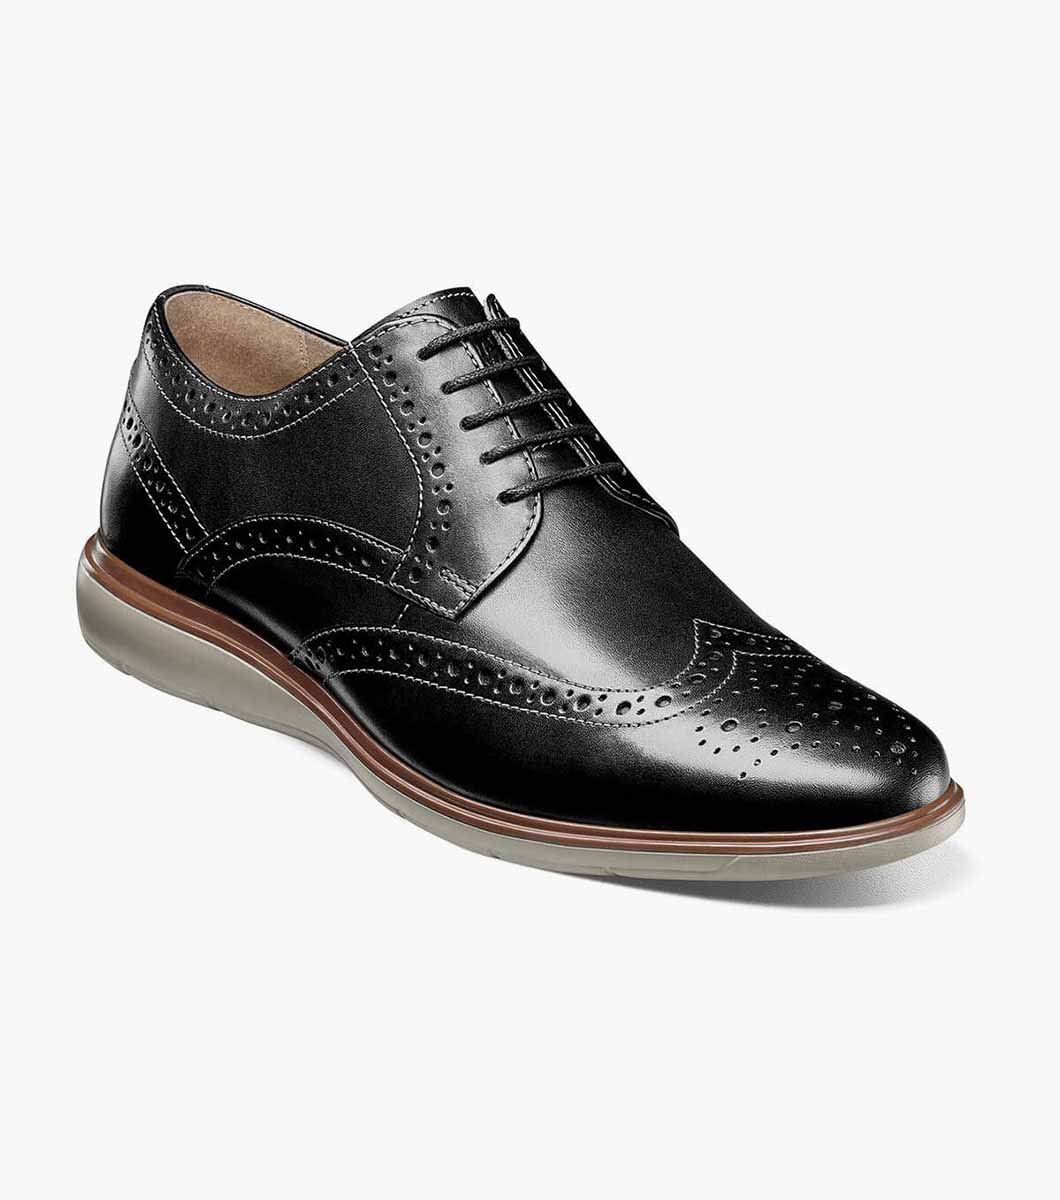 Ignight Wingtip Oxford Men’s Casual Shoes | Florsheim.com